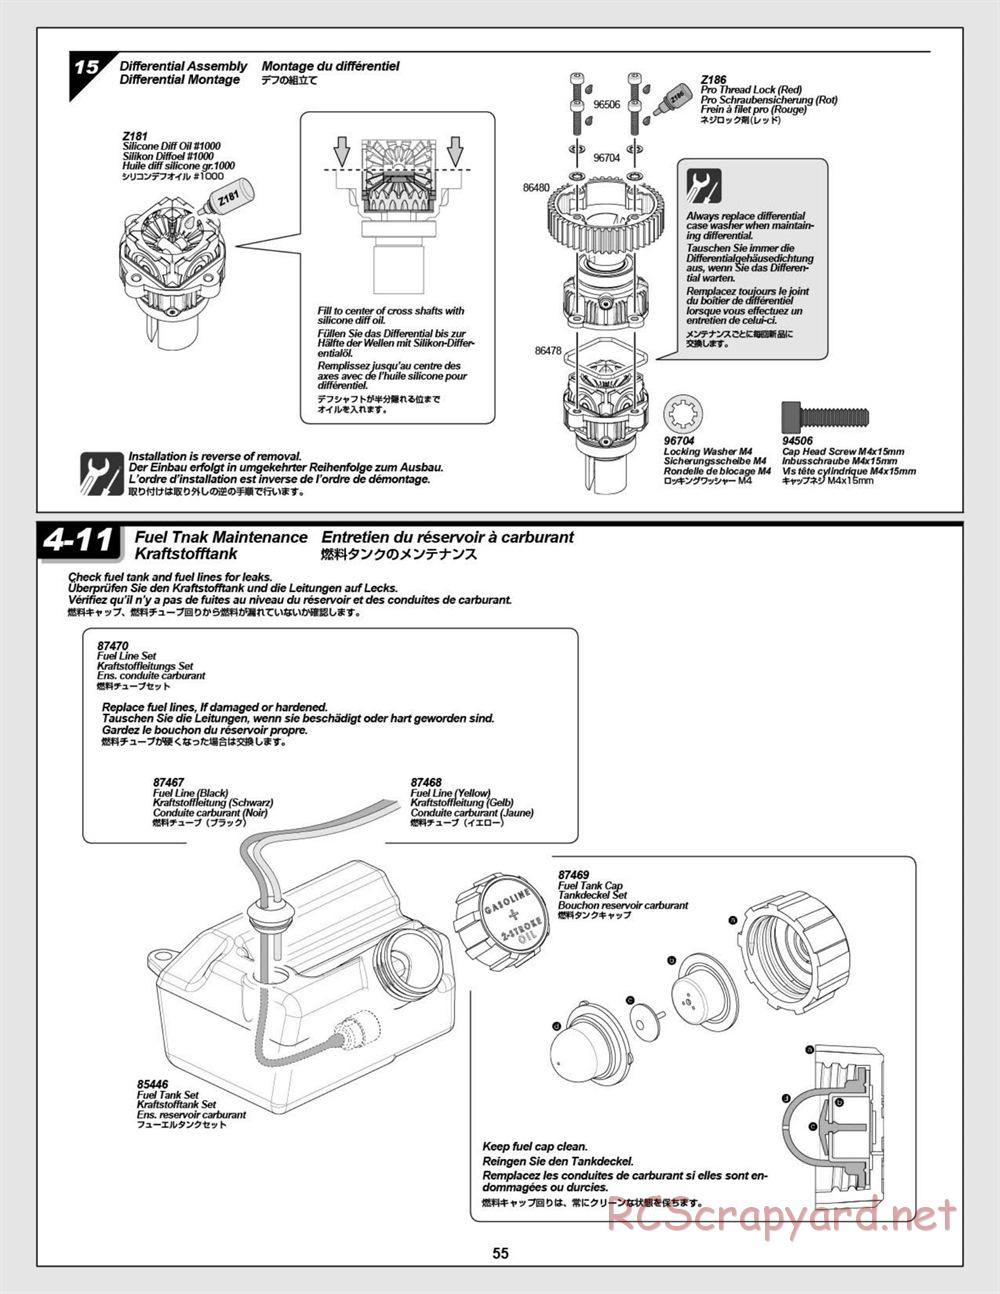 HPI - Baja 5T - Manual - Page 55